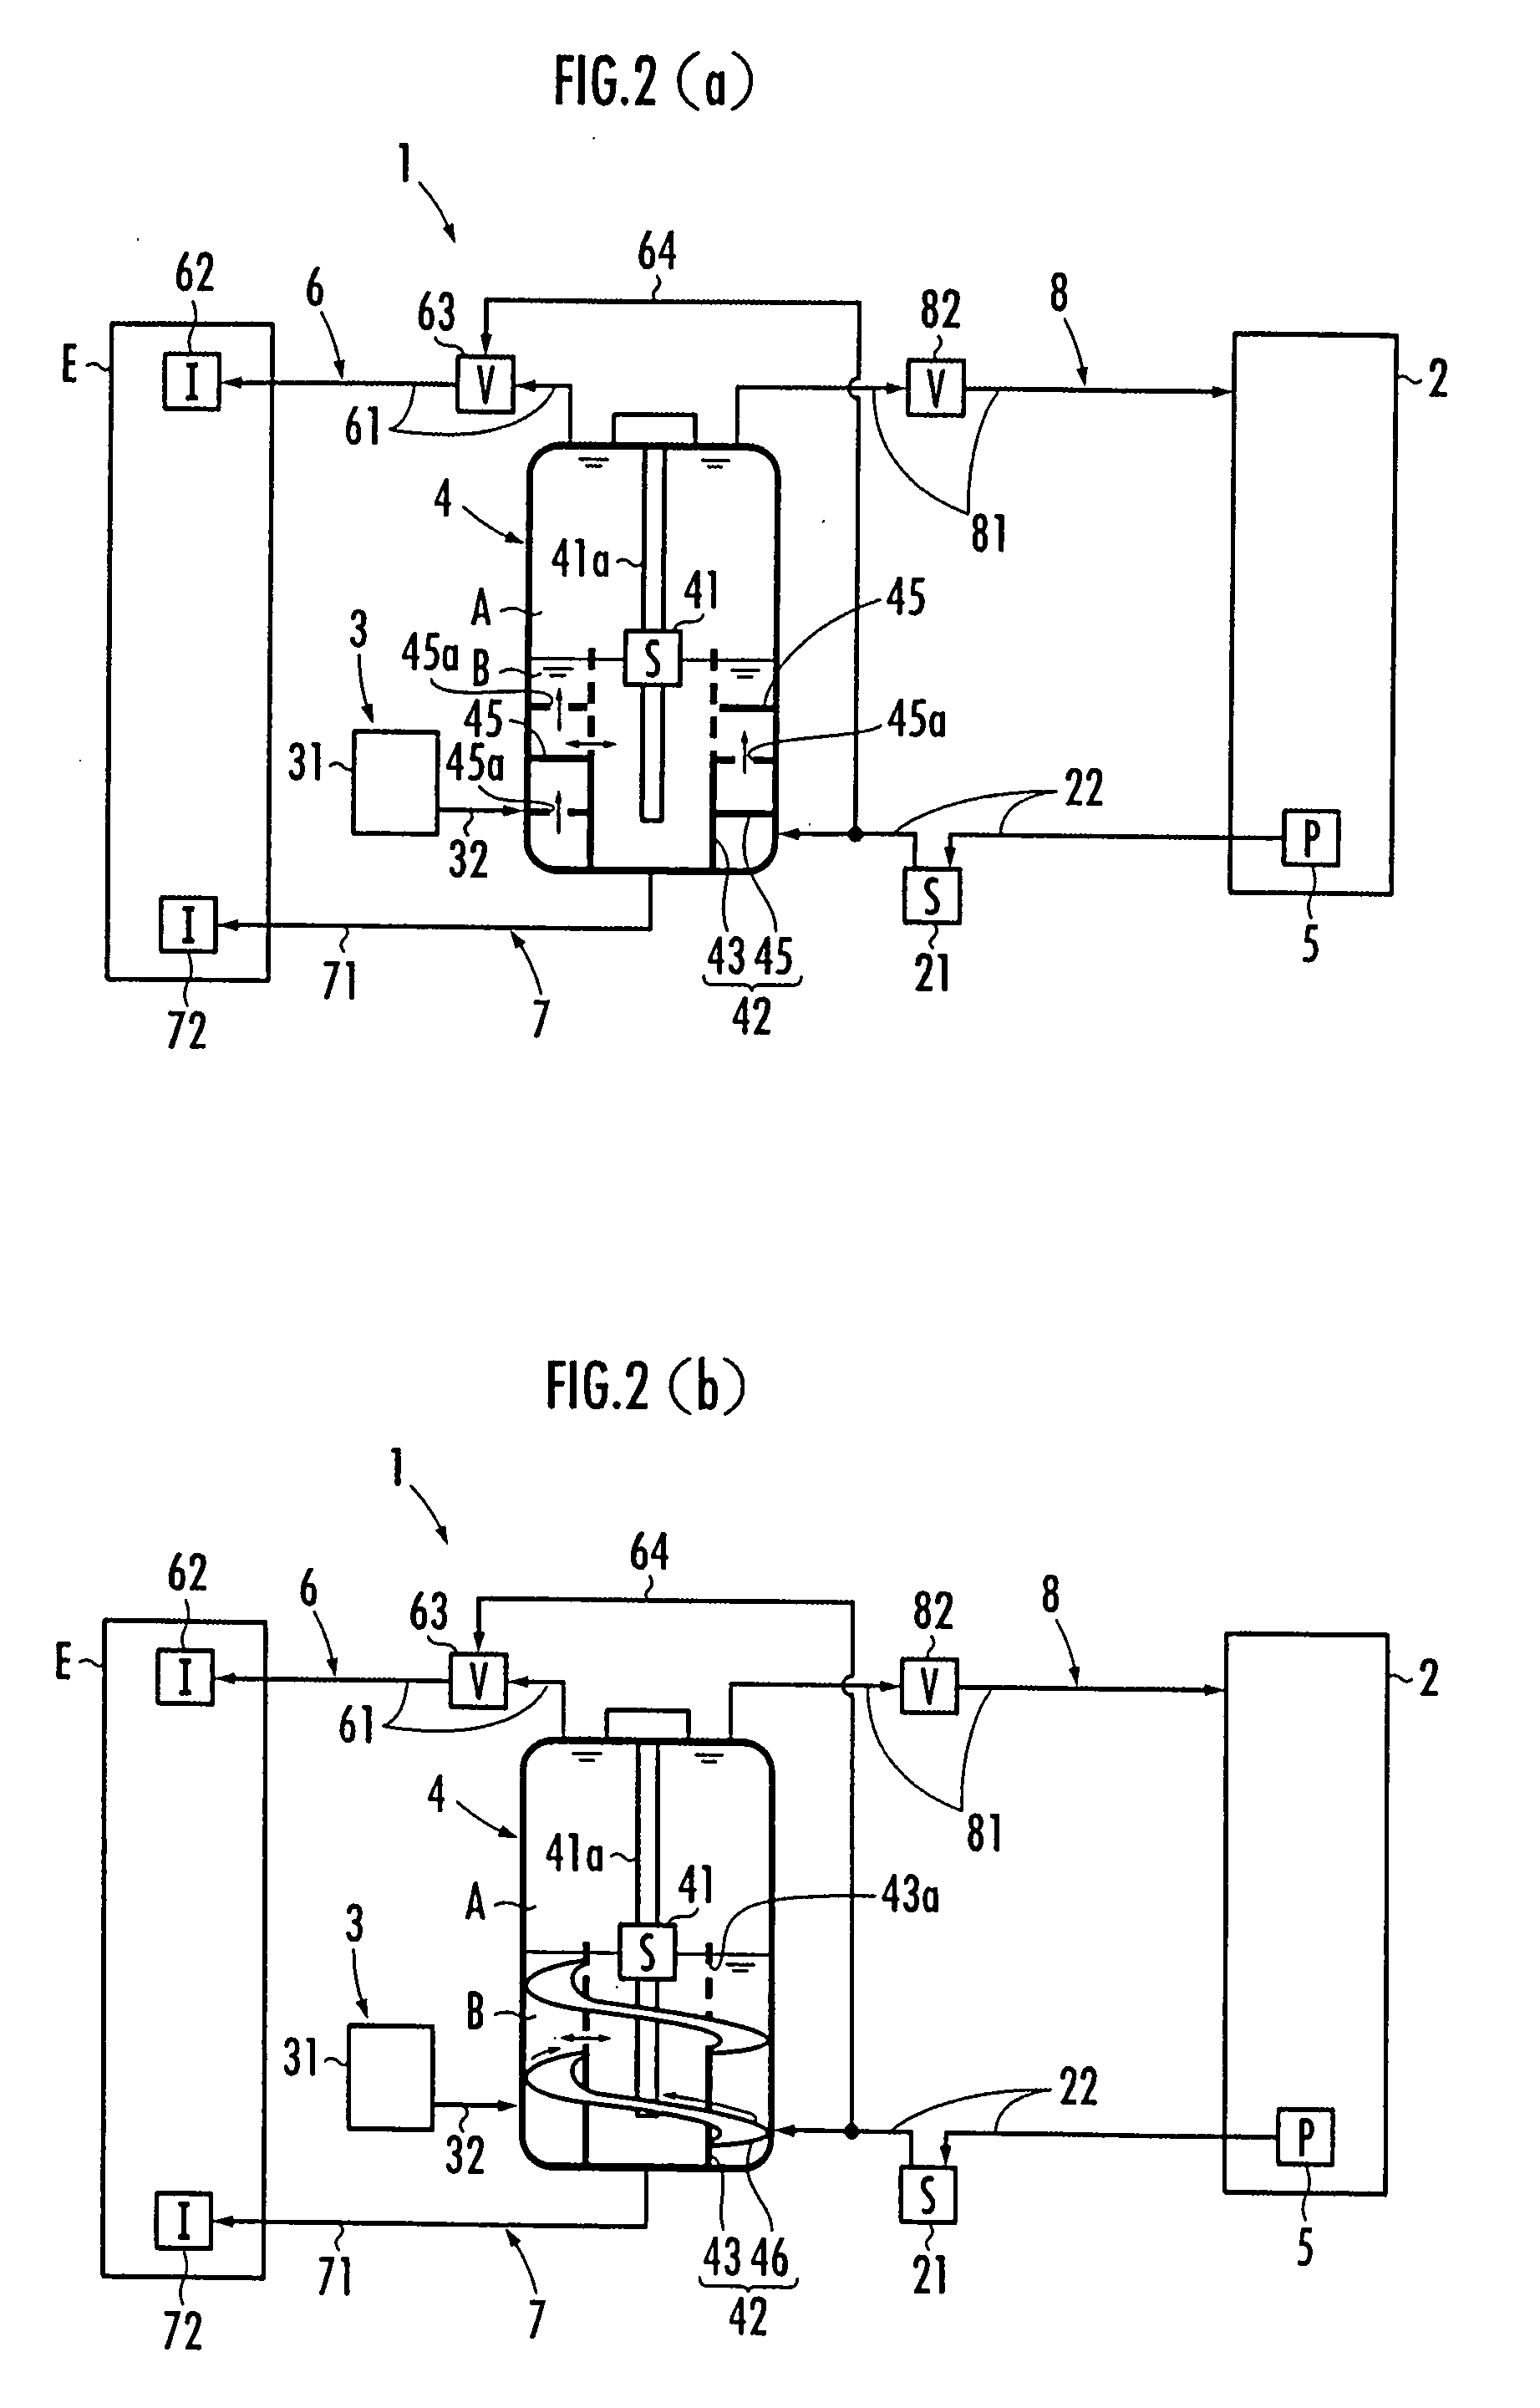 Gasoline-ethanol separation apparatus